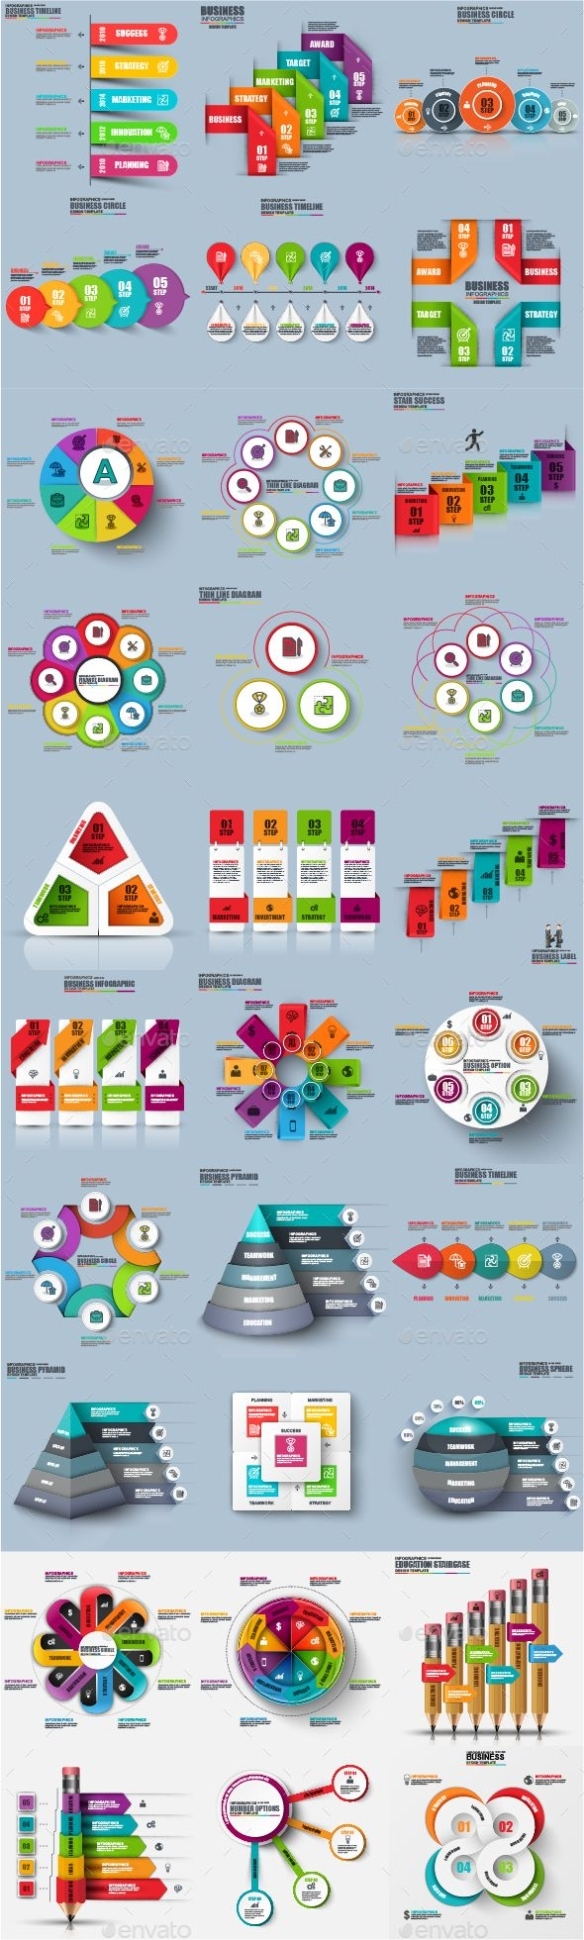 Business Infographic : Business Infographic Element Templates Vector Eps, Ai Illustrator In Illustrator Infographic Template